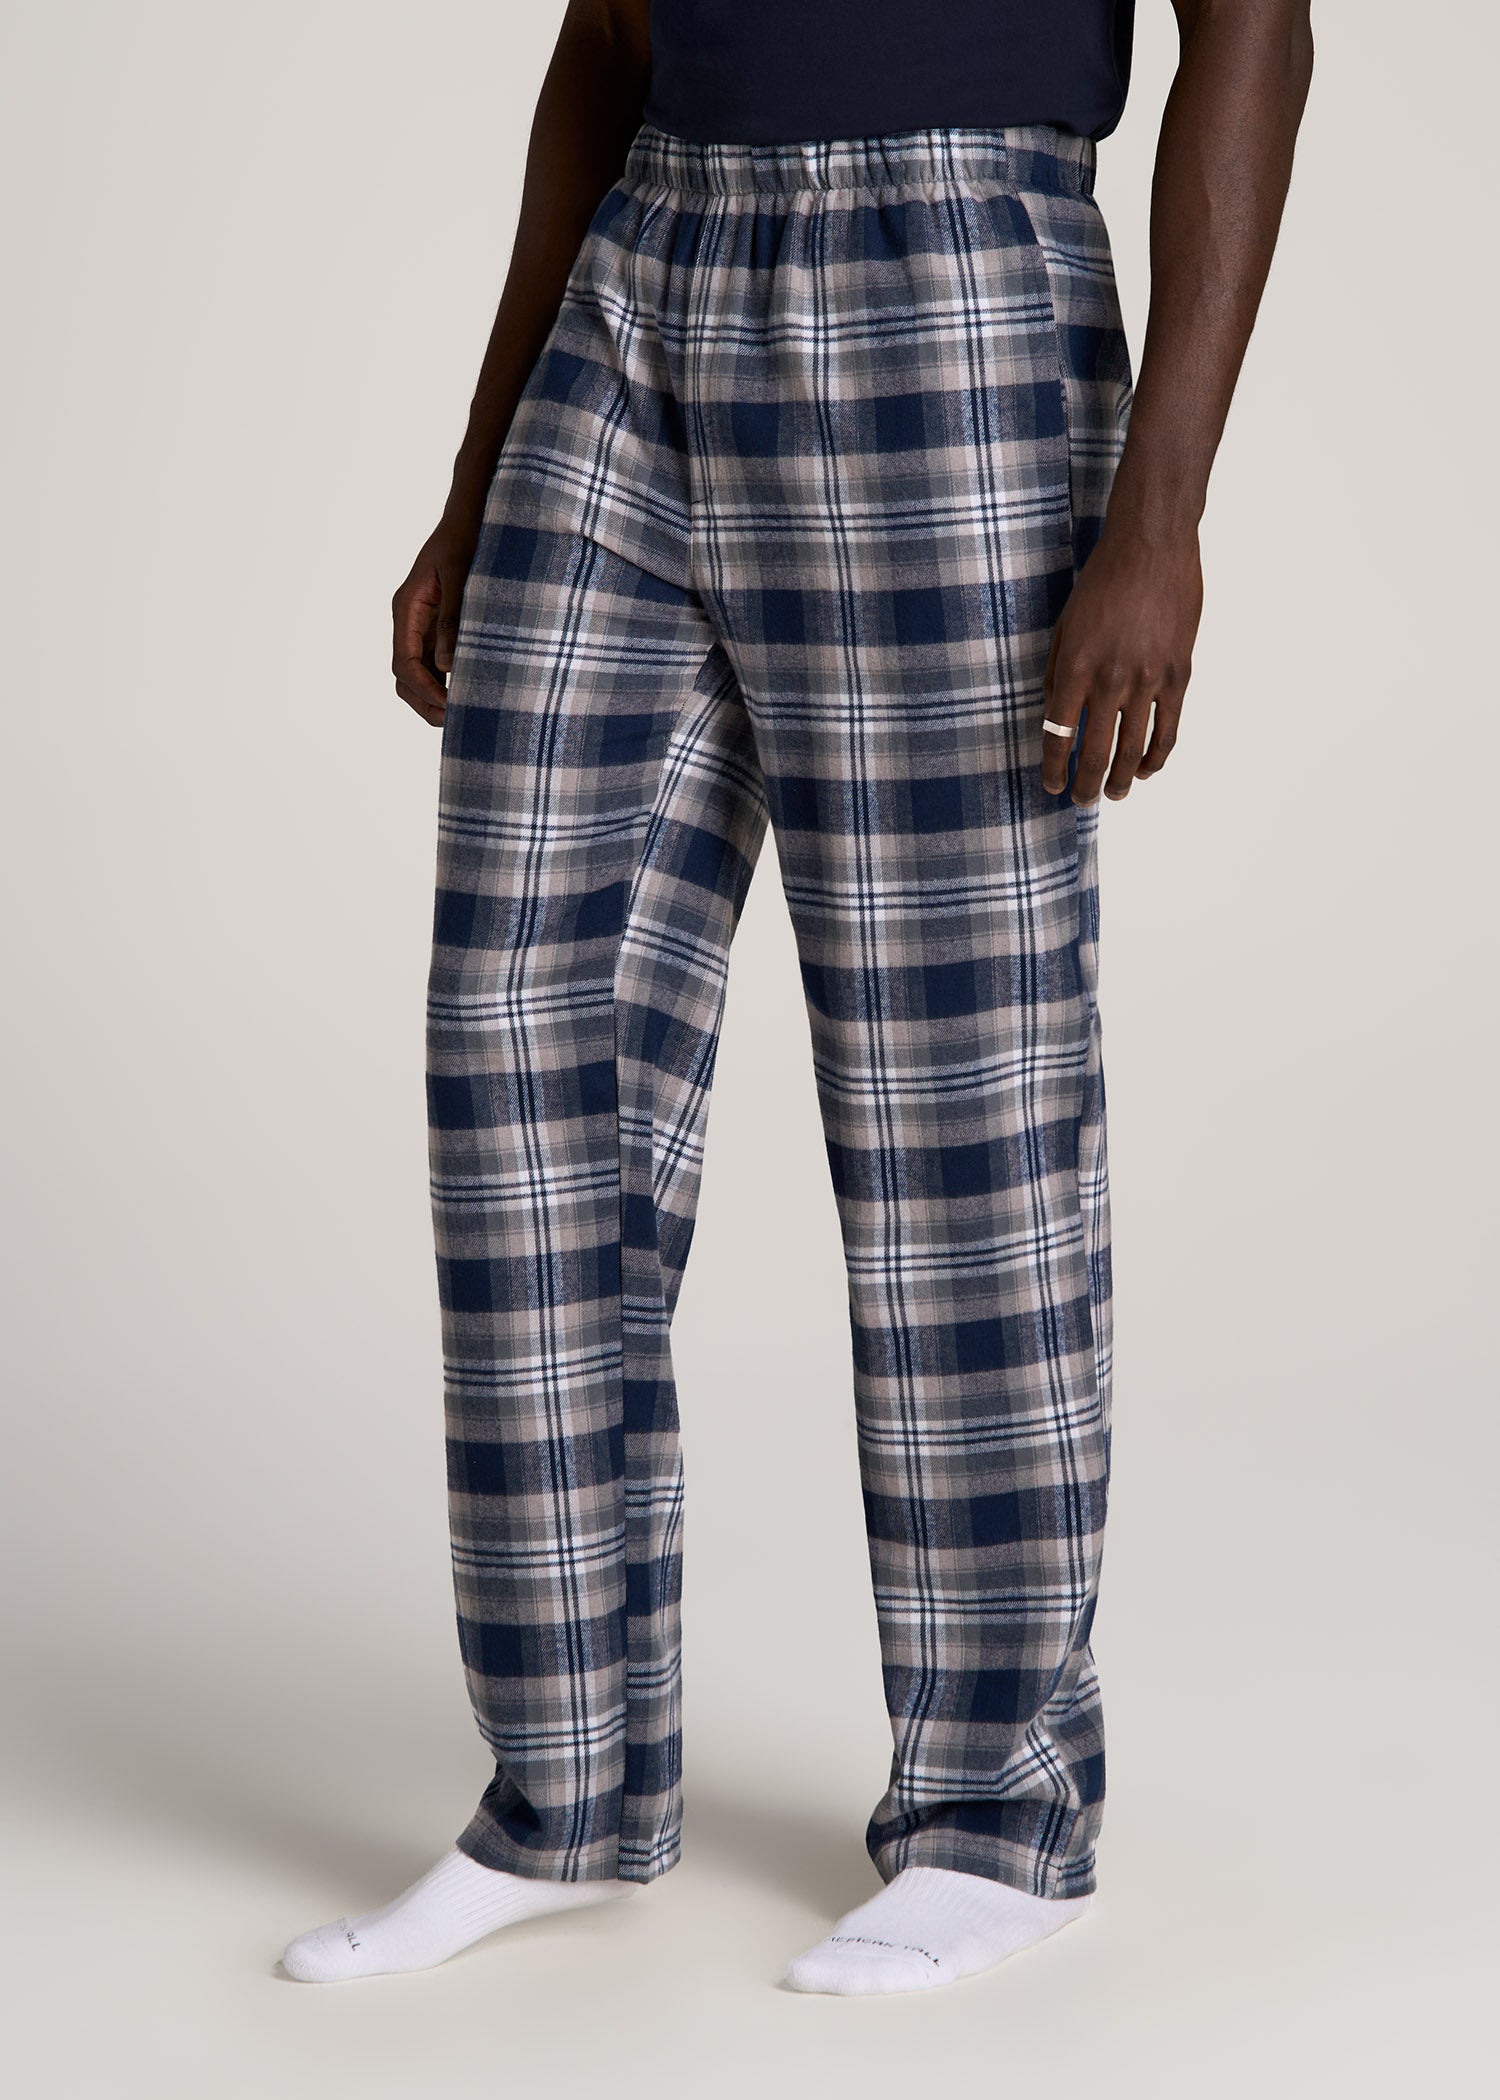 Men's Cotton Flannel Plaid Pajama Sleep Pants Super Soft Lounge Bottoms PJ's  | eBay